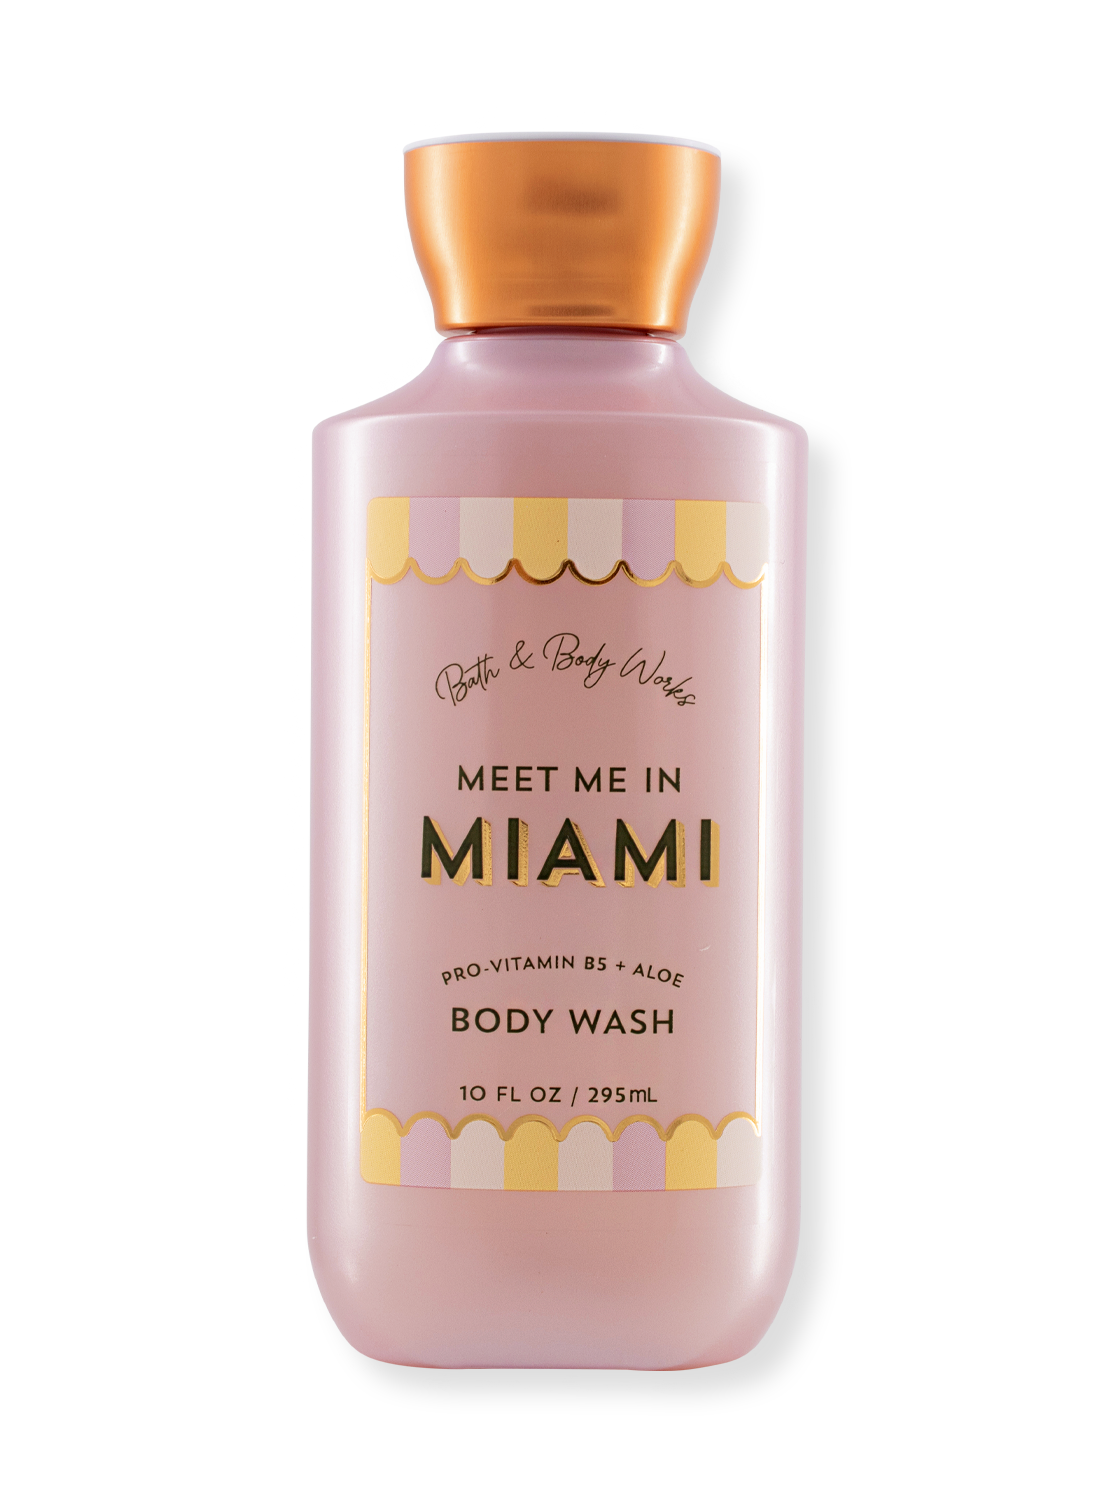 Shower gel/body wash - Meet me in Miami - 295ml